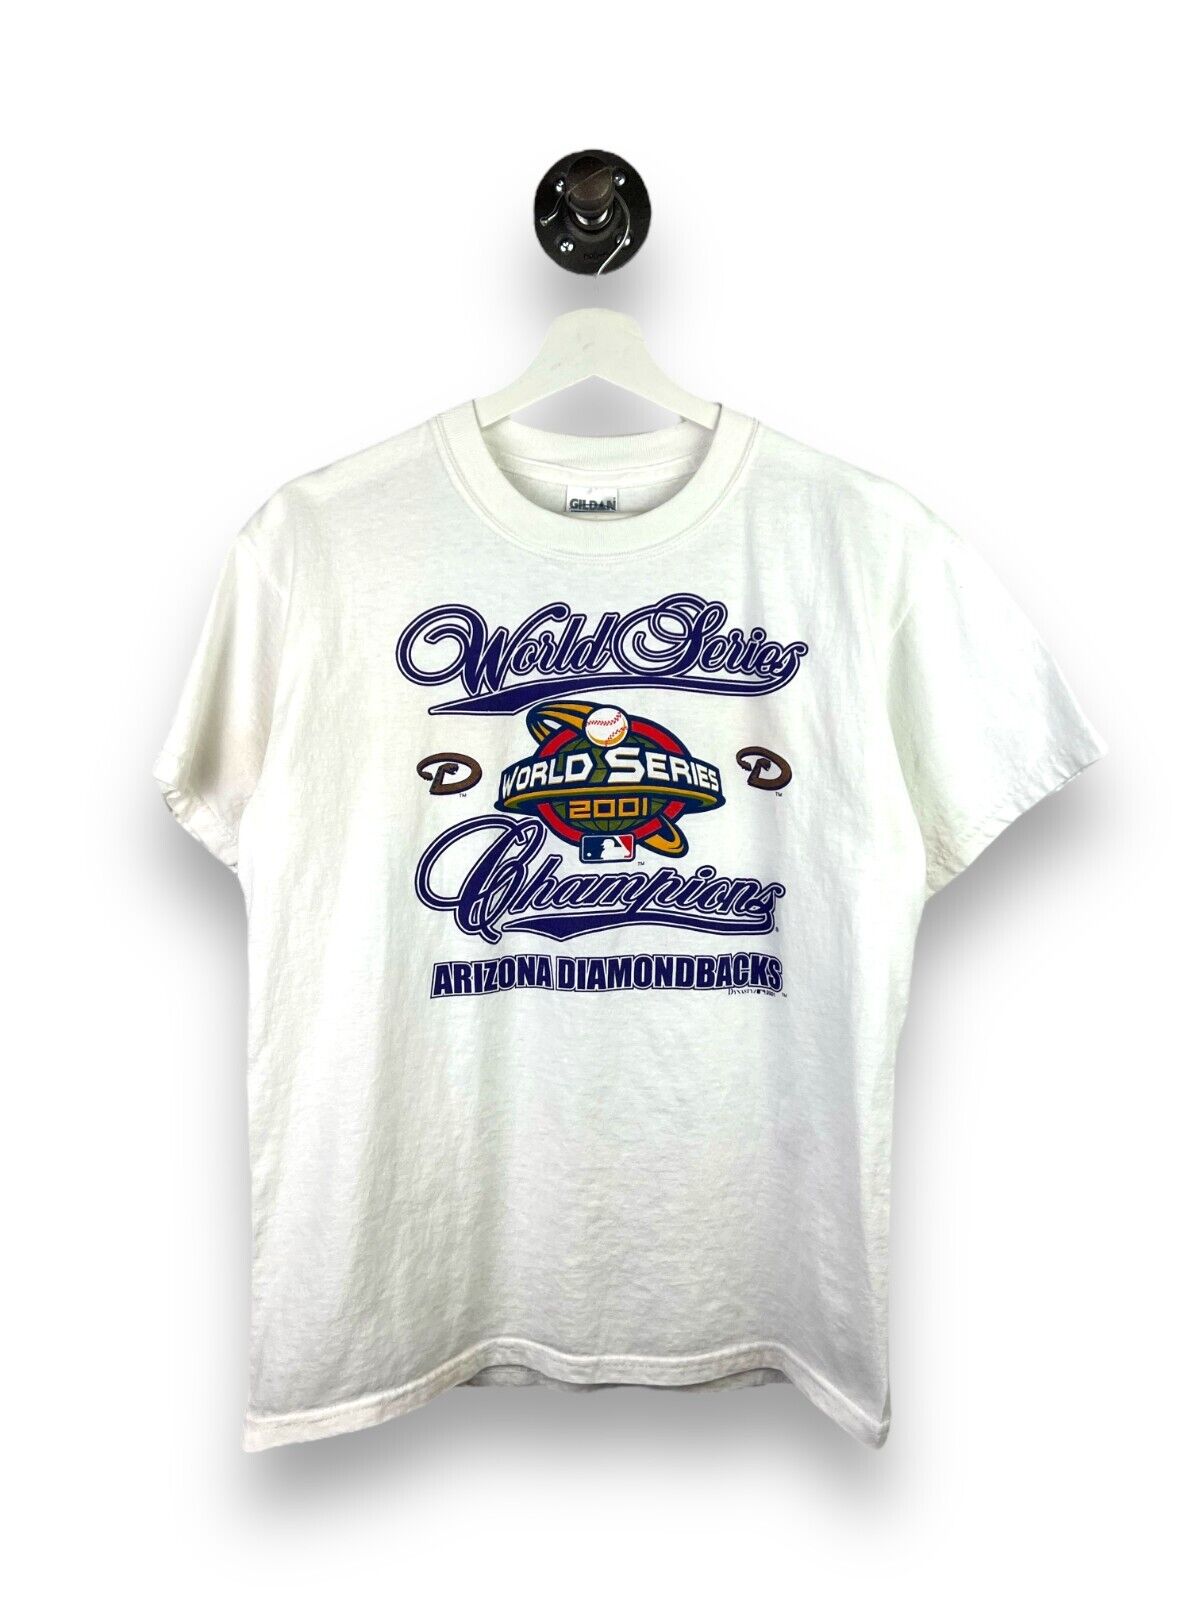 Vintage 2001 Arizona Diamondbacks MLB World Series Champs Graphic T-Shirt Medium